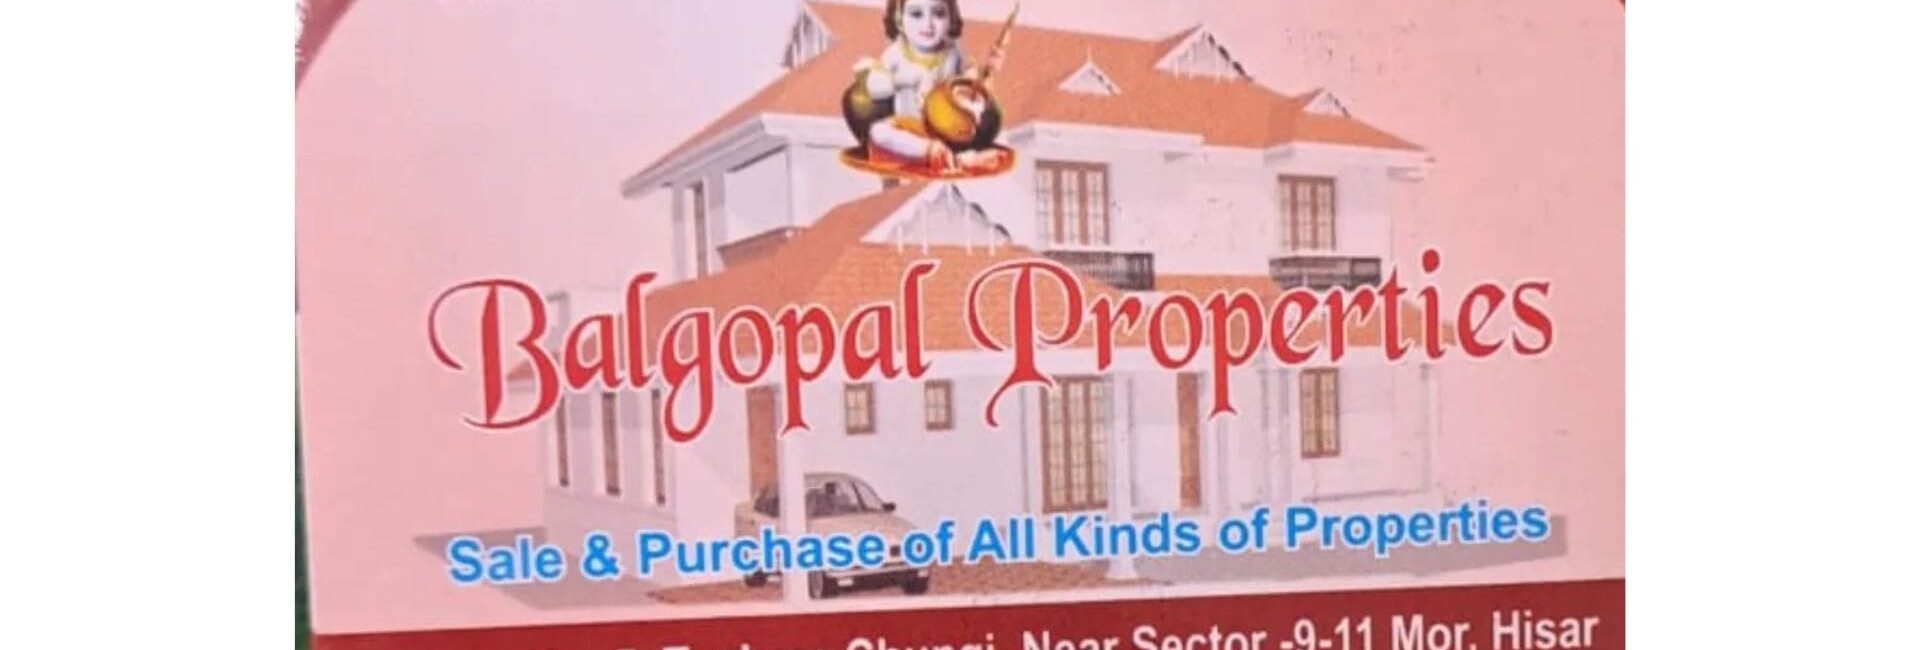 Balgopal Properties - Property Dealer in Hisar